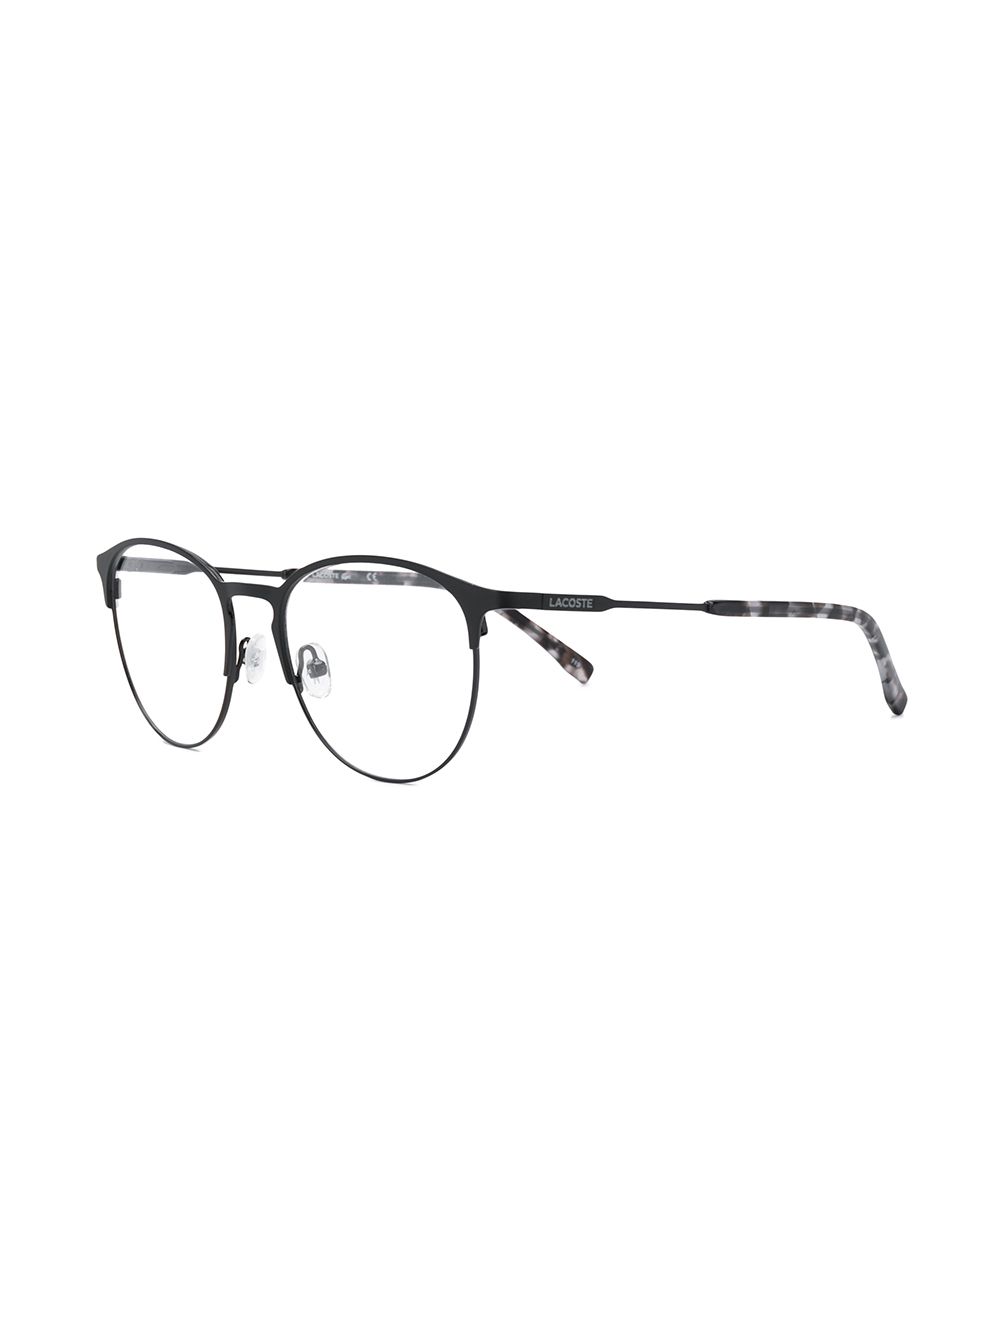 фото Lacoste очки в круглой оправе